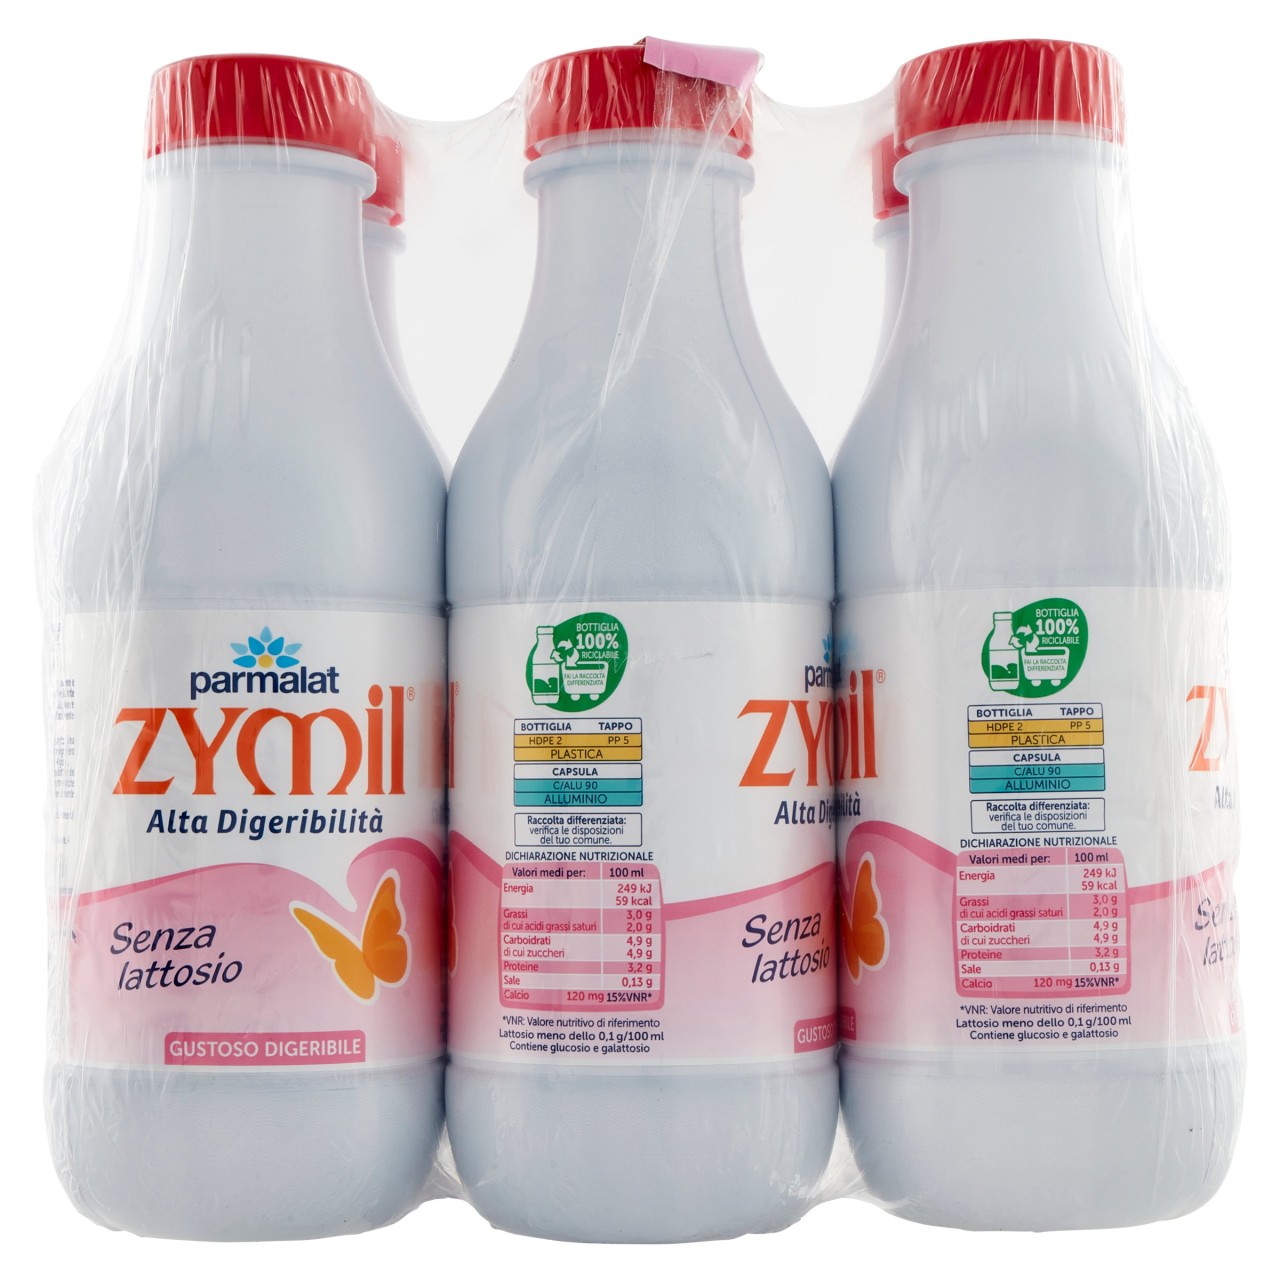 Zymil Alta Digeribilità Senza lattosio Gustoso Digeribile 6 x 1000 ml -  Dispensa - Supermercati Gecop